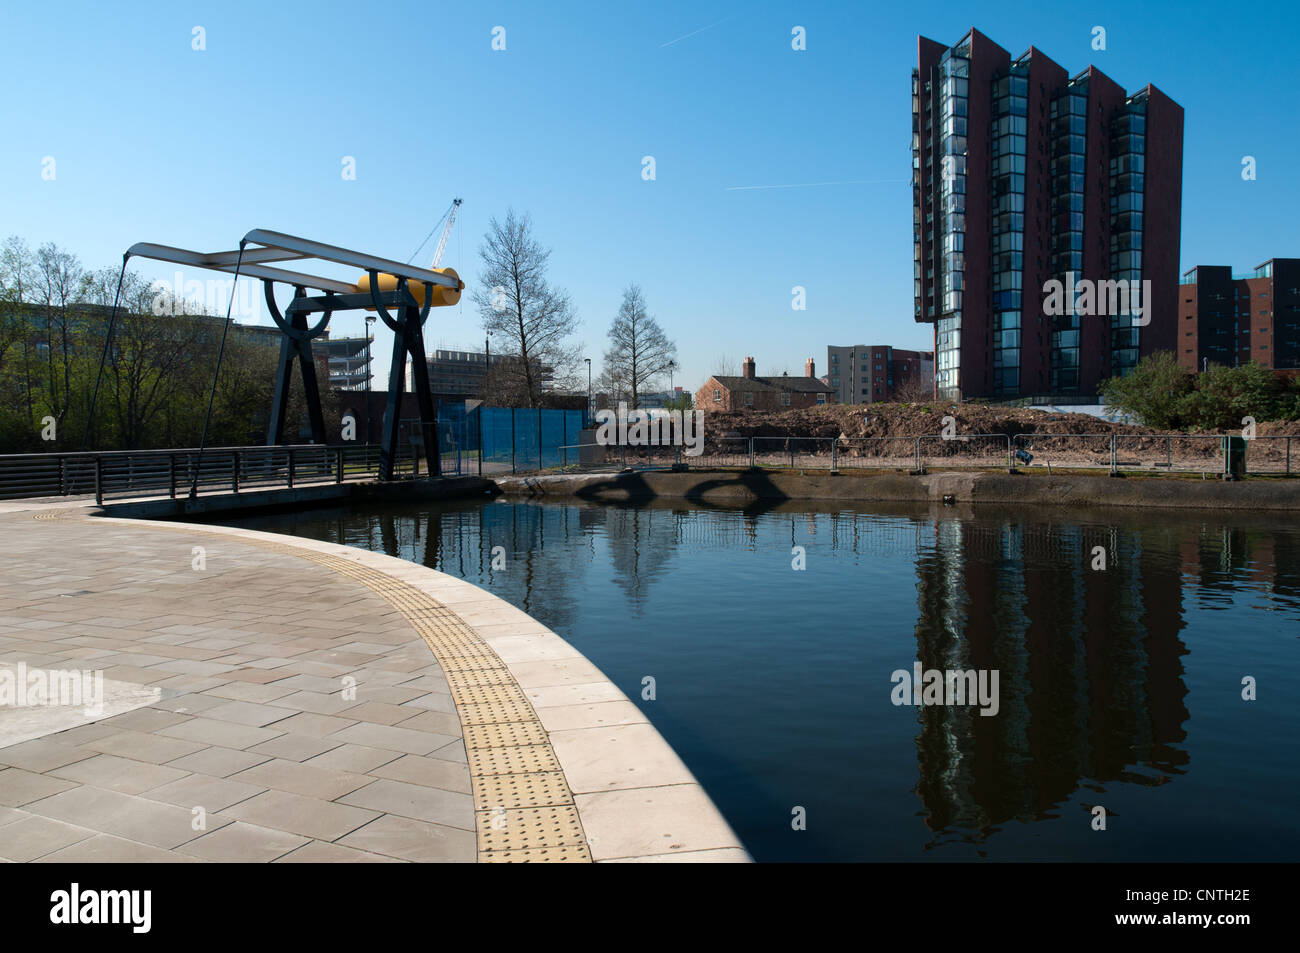 Islington Wharf apartment block and bascule lifting bridge, New Islington, Ancoats, Manchester, England, UK Stock Photo